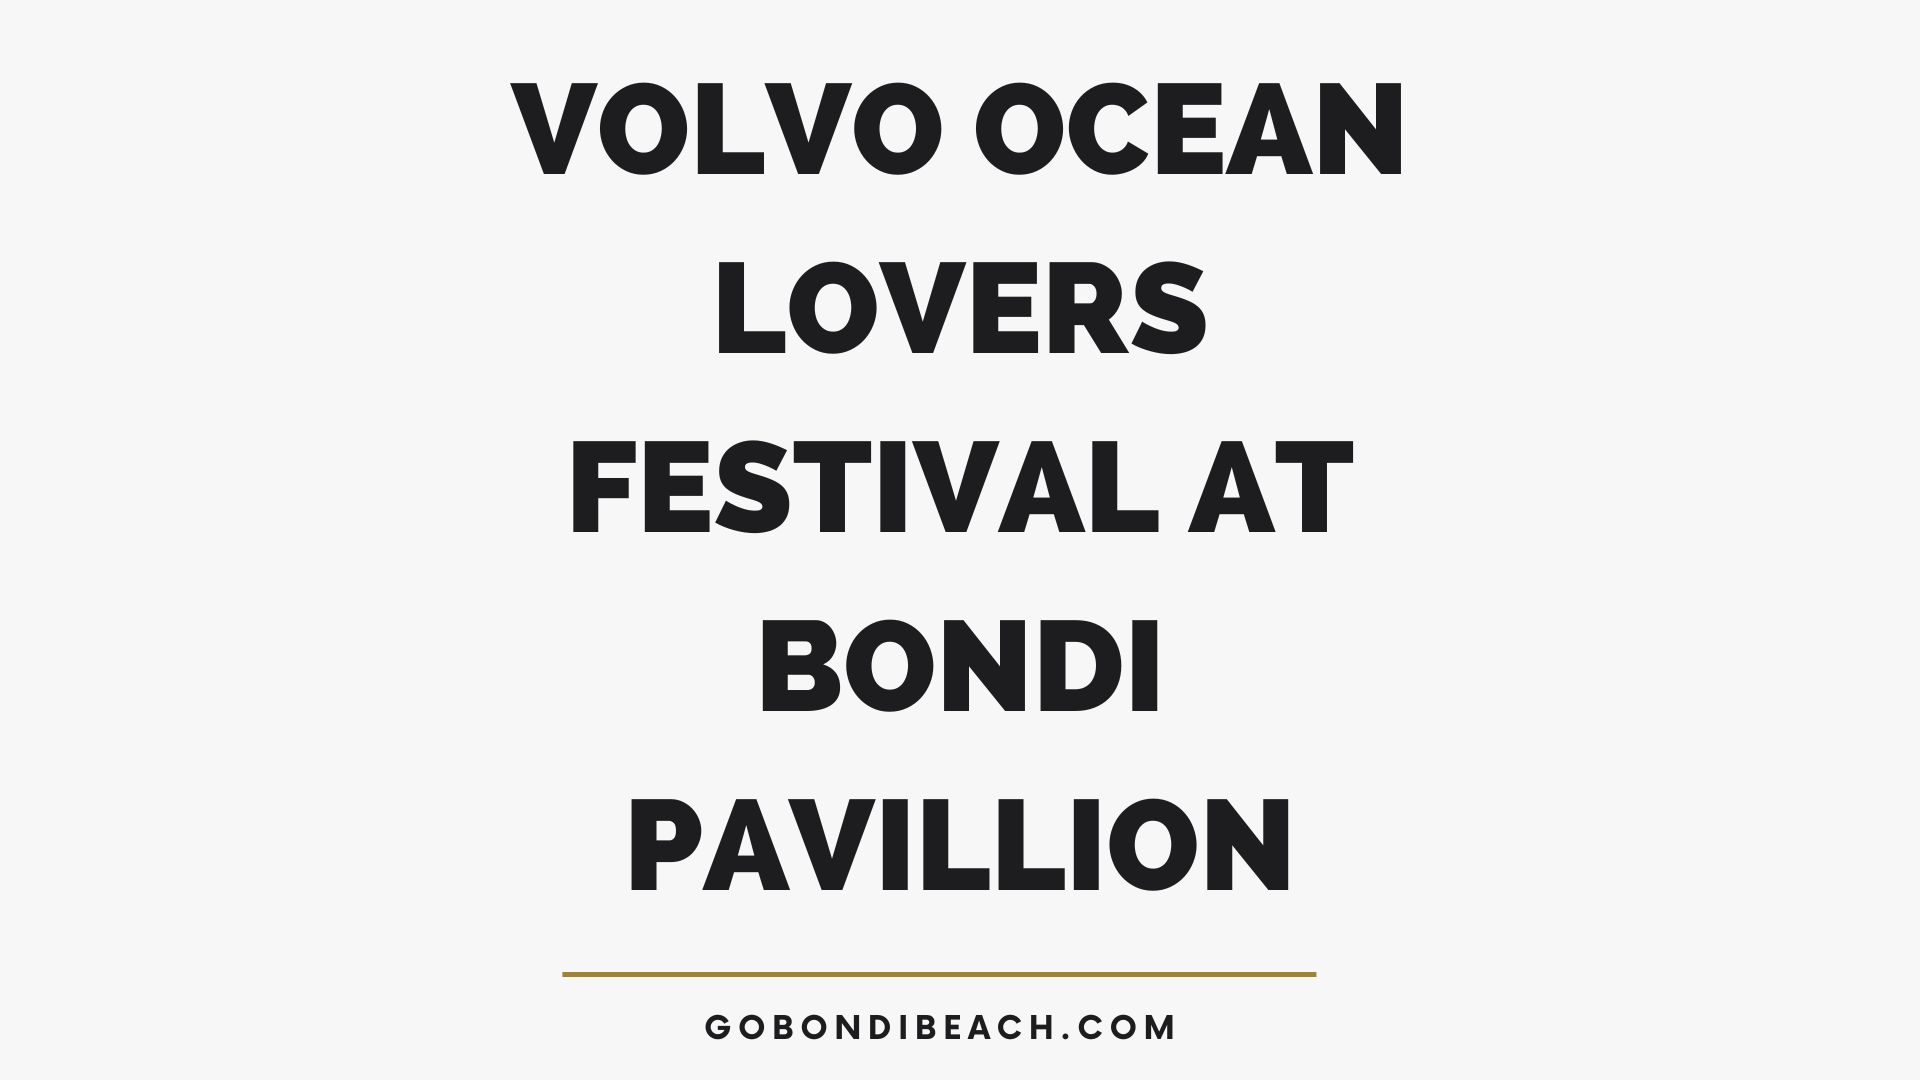 Volvo Ocean Lovers Festival at Bondi Pavillion